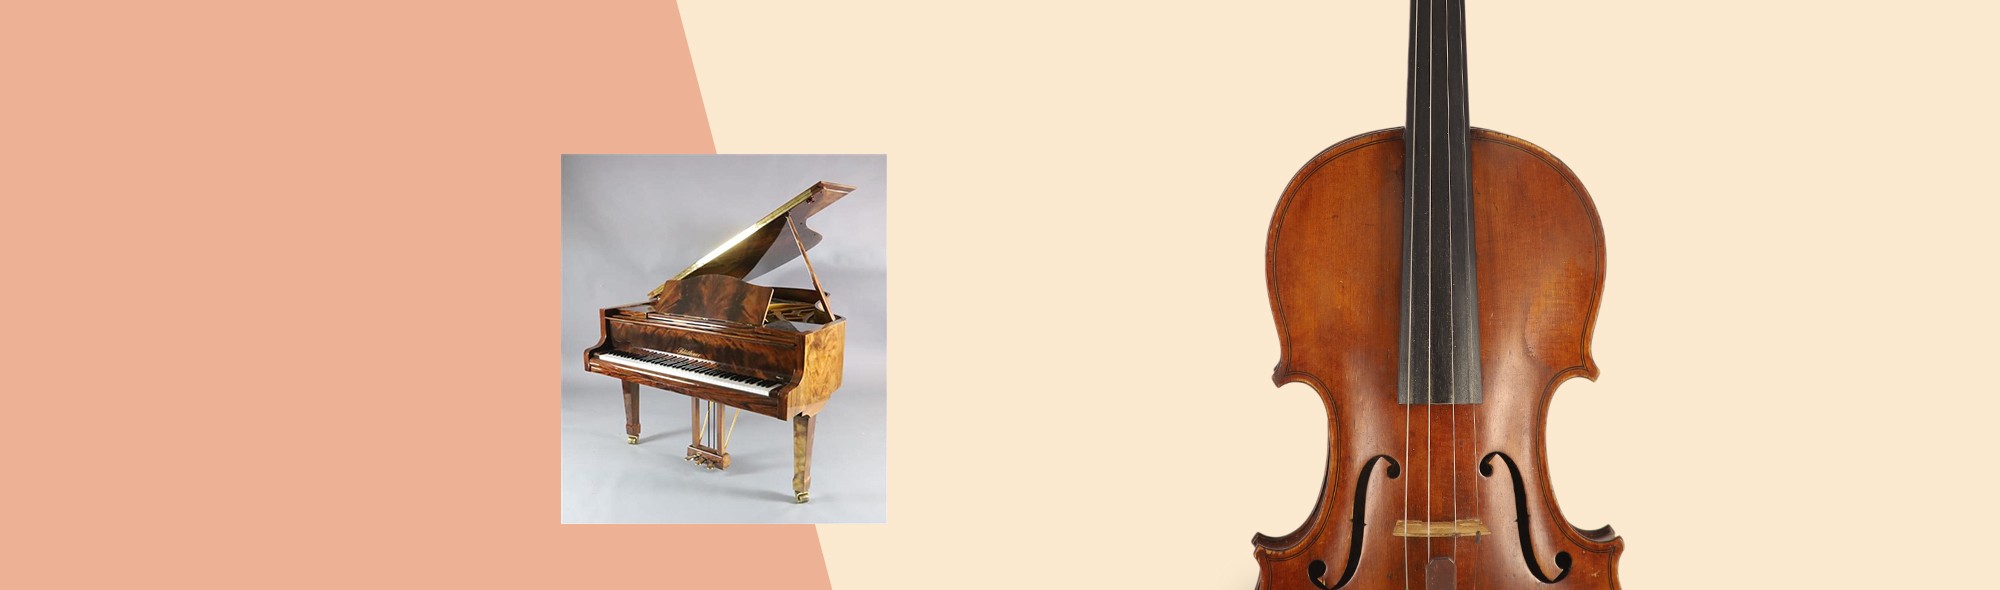 piano & violin